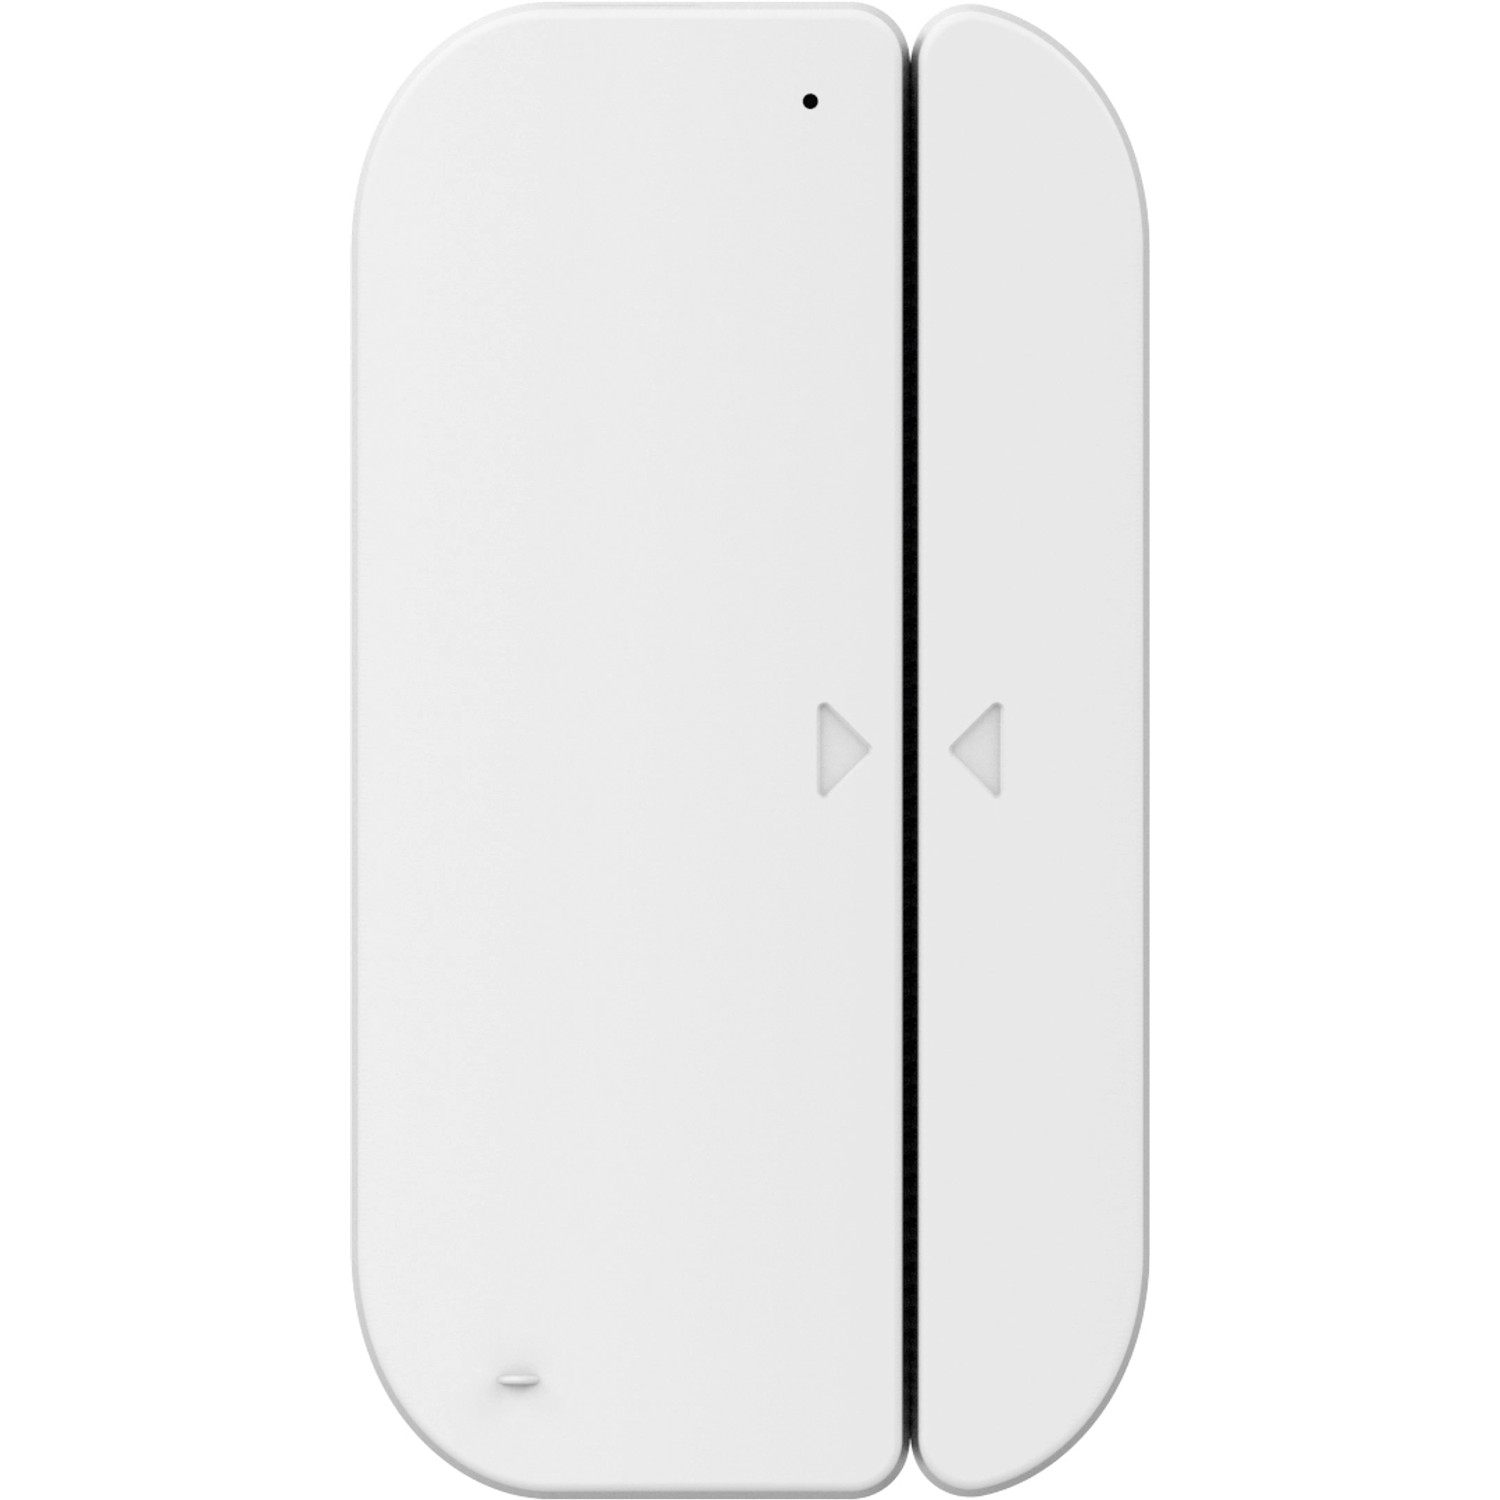 Hama Tür-/Fenster-Kontakt Smart WiFi Weiß